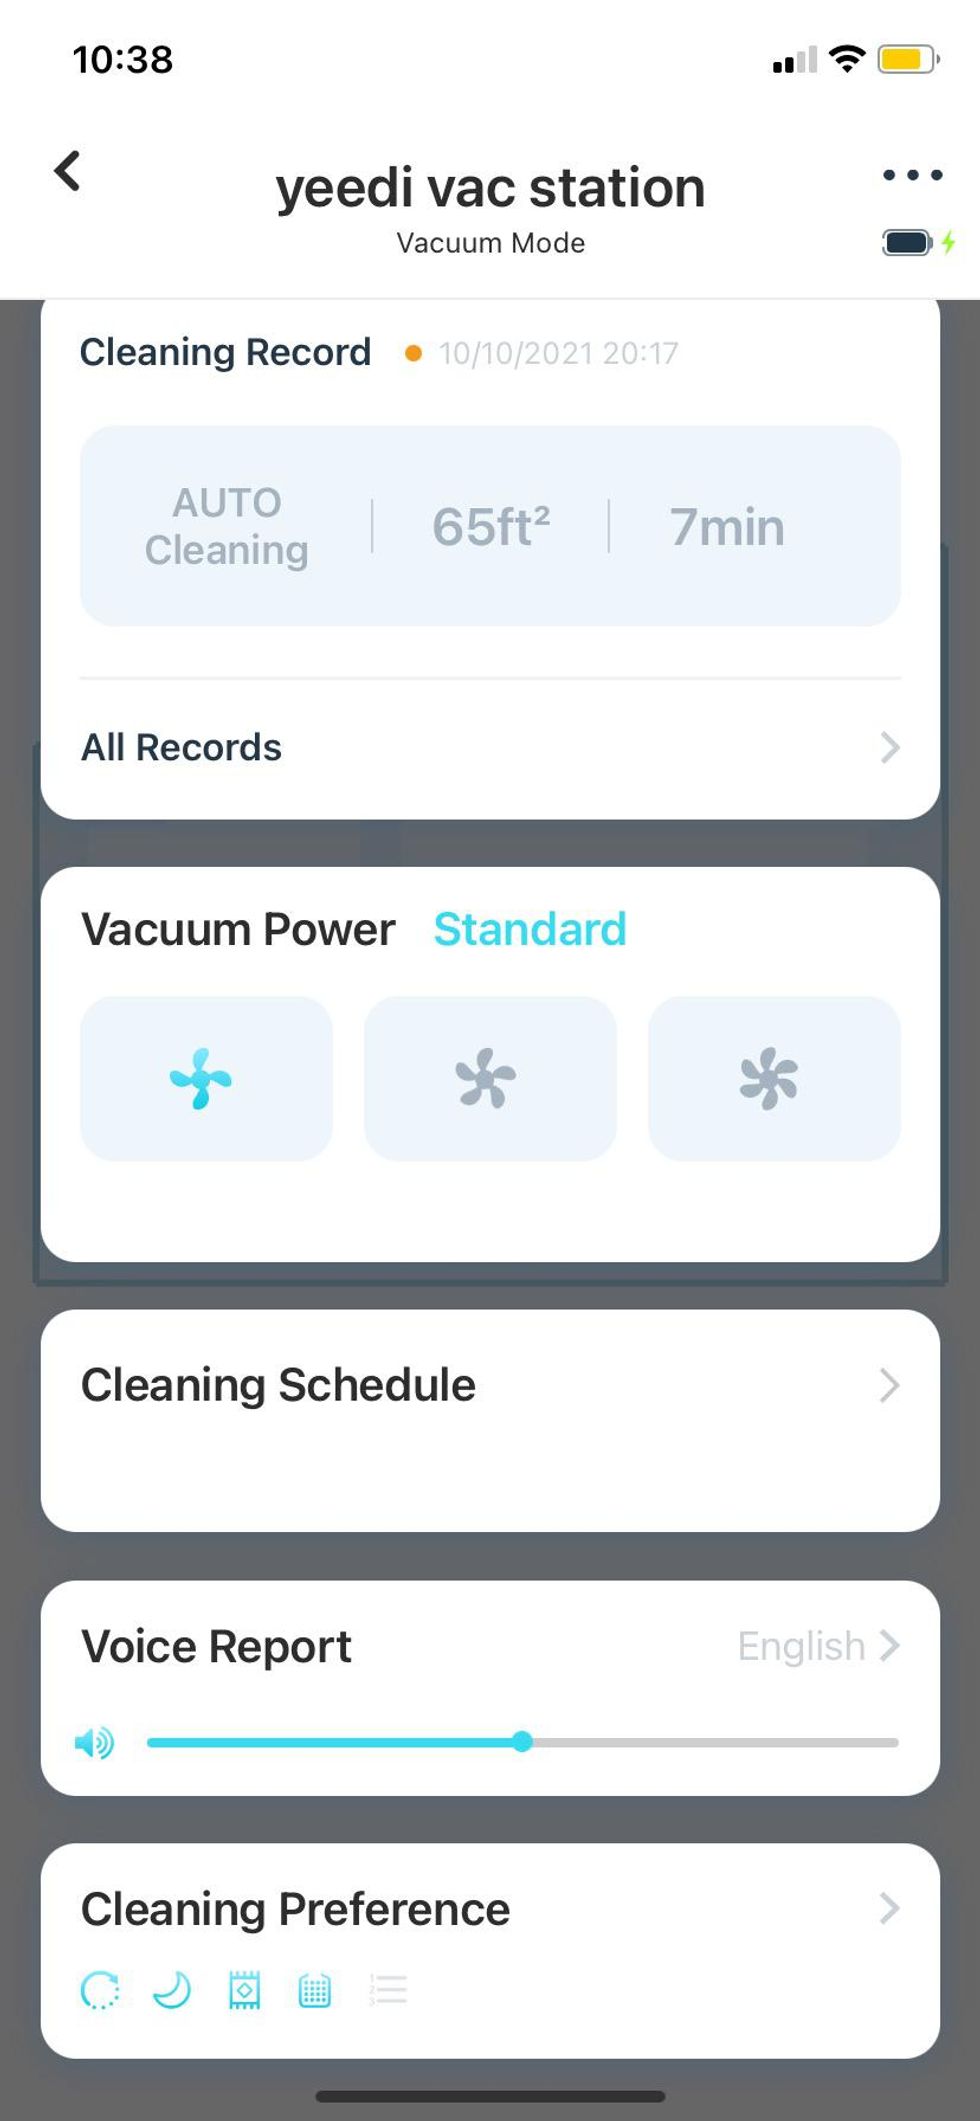 Yeedi app showing vacuum controls